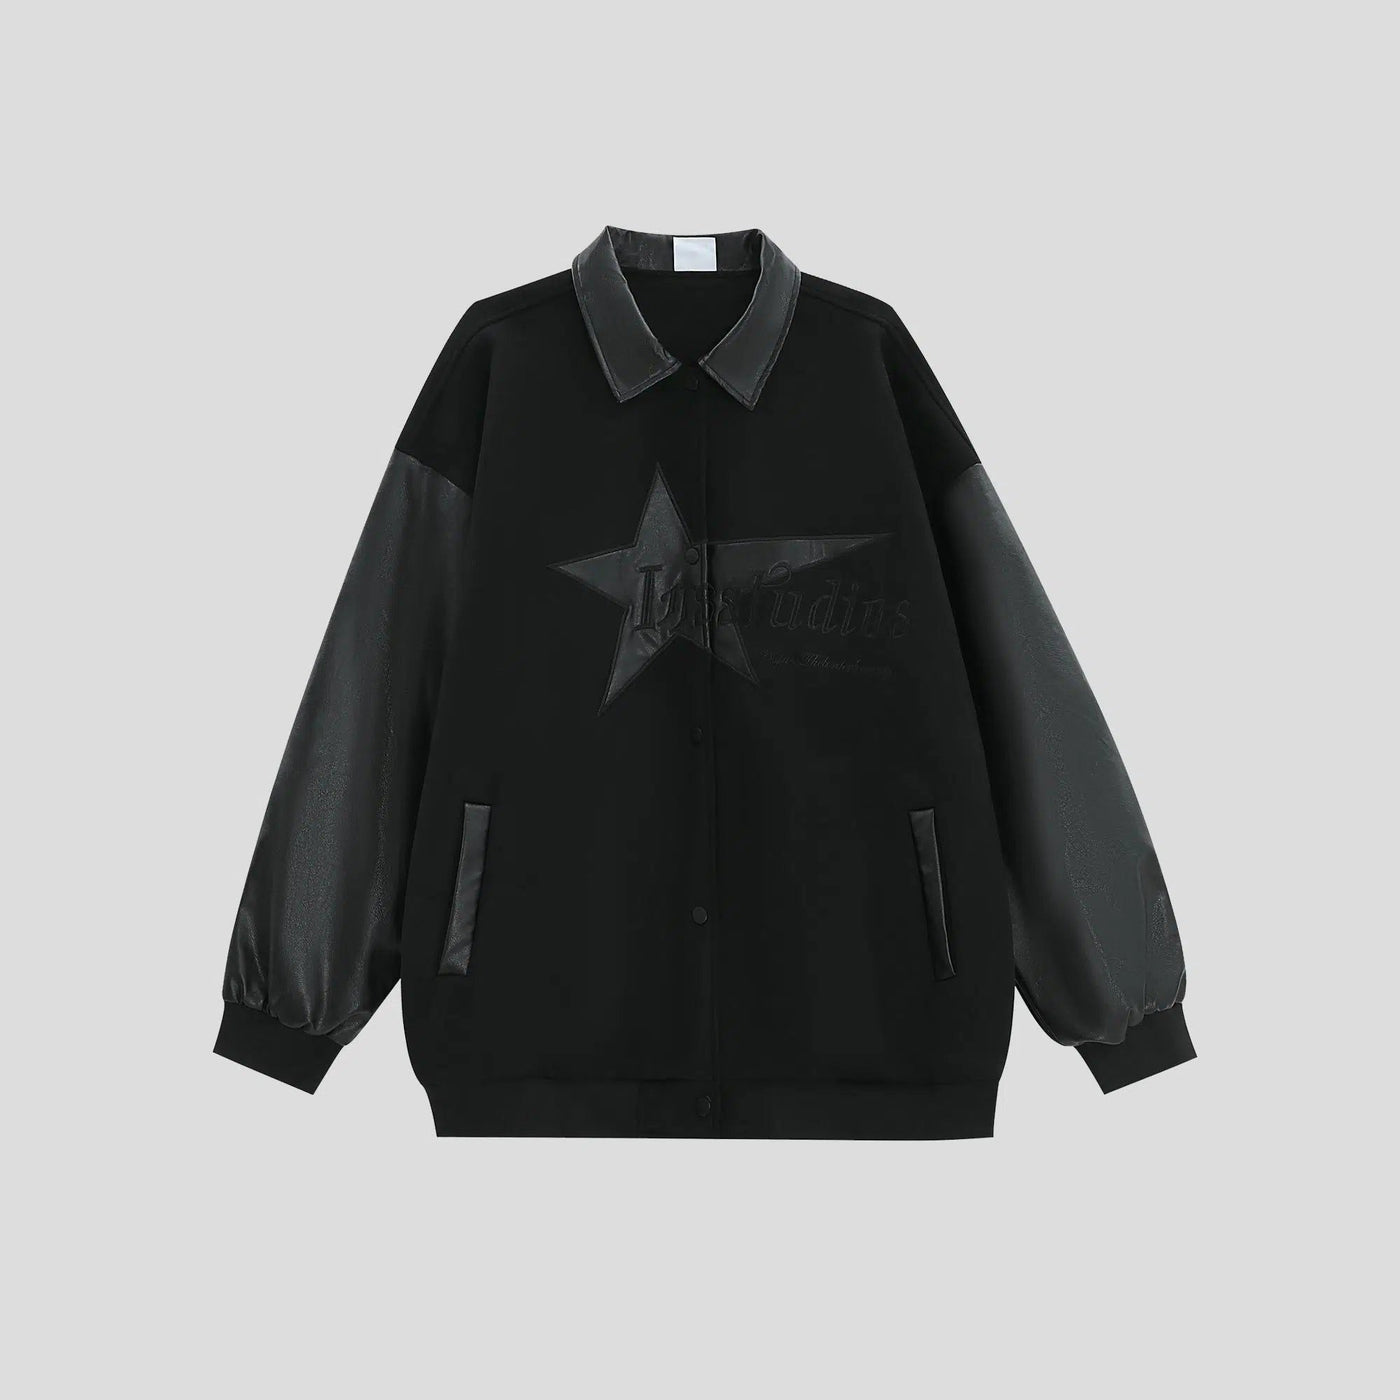 Star Logo Splice Jacket Korean Street Fashion Jacket By INS Korea Shop Online at OH Vault